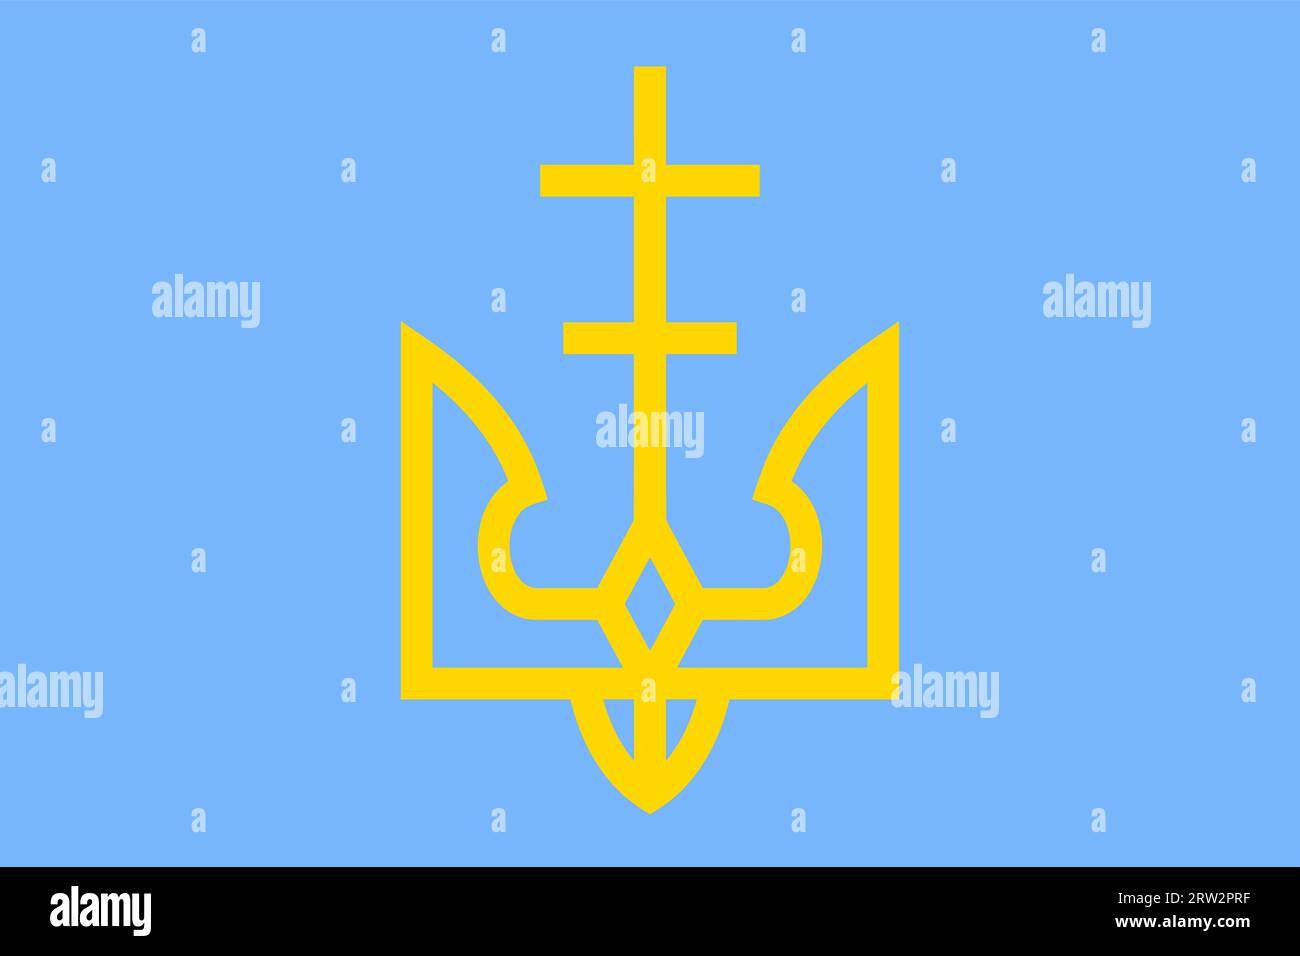 Ukraine flag. Flag of Ukraine. National symbol. Square, round and heart shape. Ukrainian flag symbol. Blue and yellow illustration. Stock vector illus Stock Vector